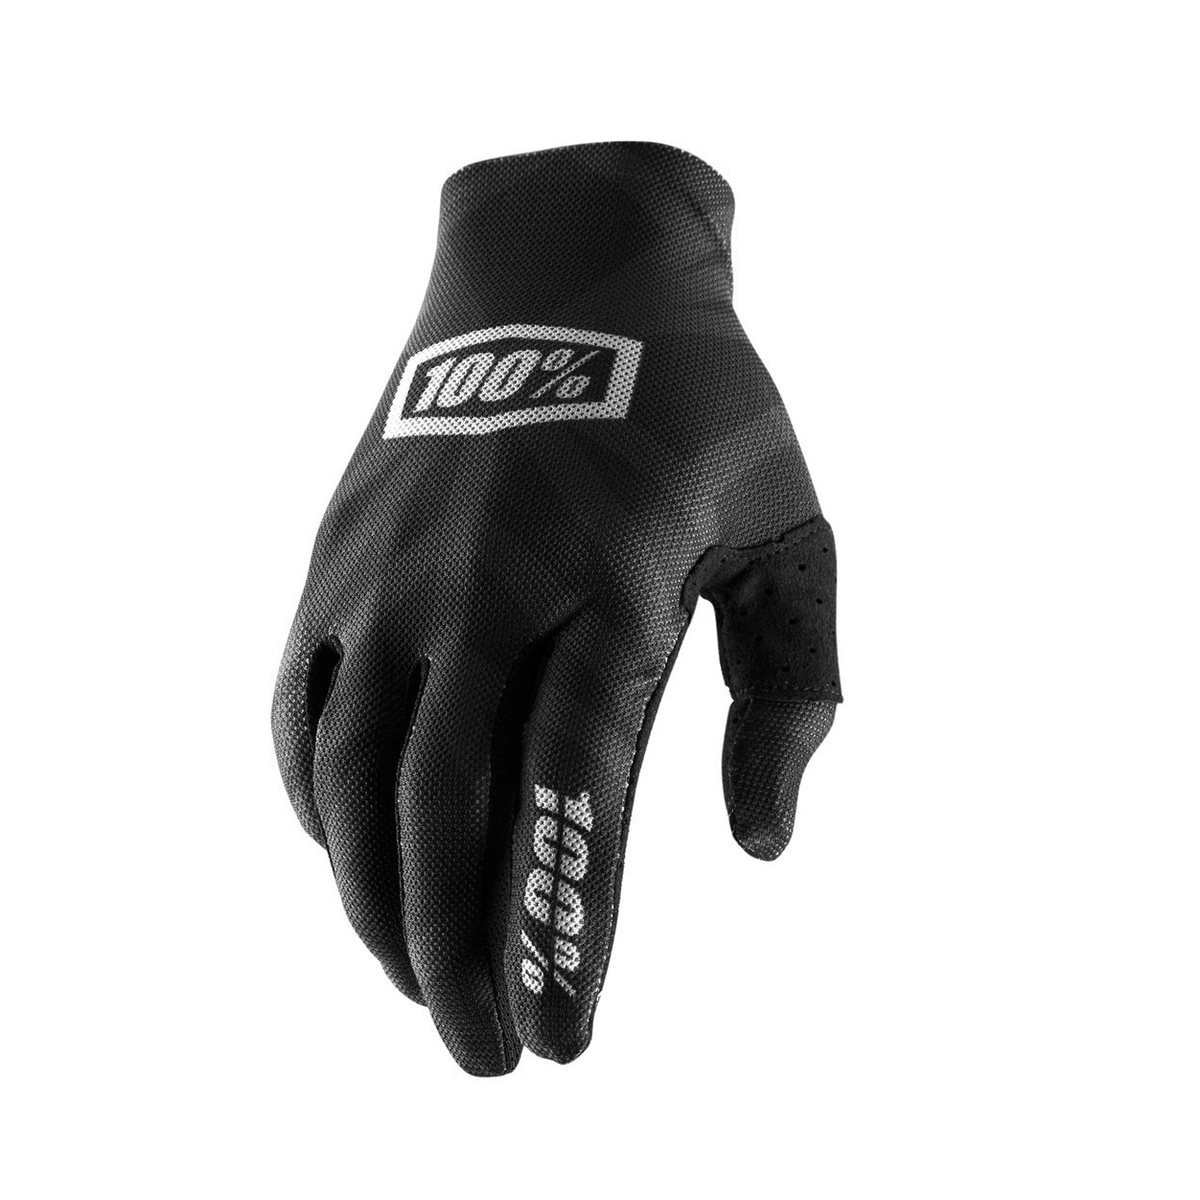 Mtb gloves celium 2 black / silver size XL